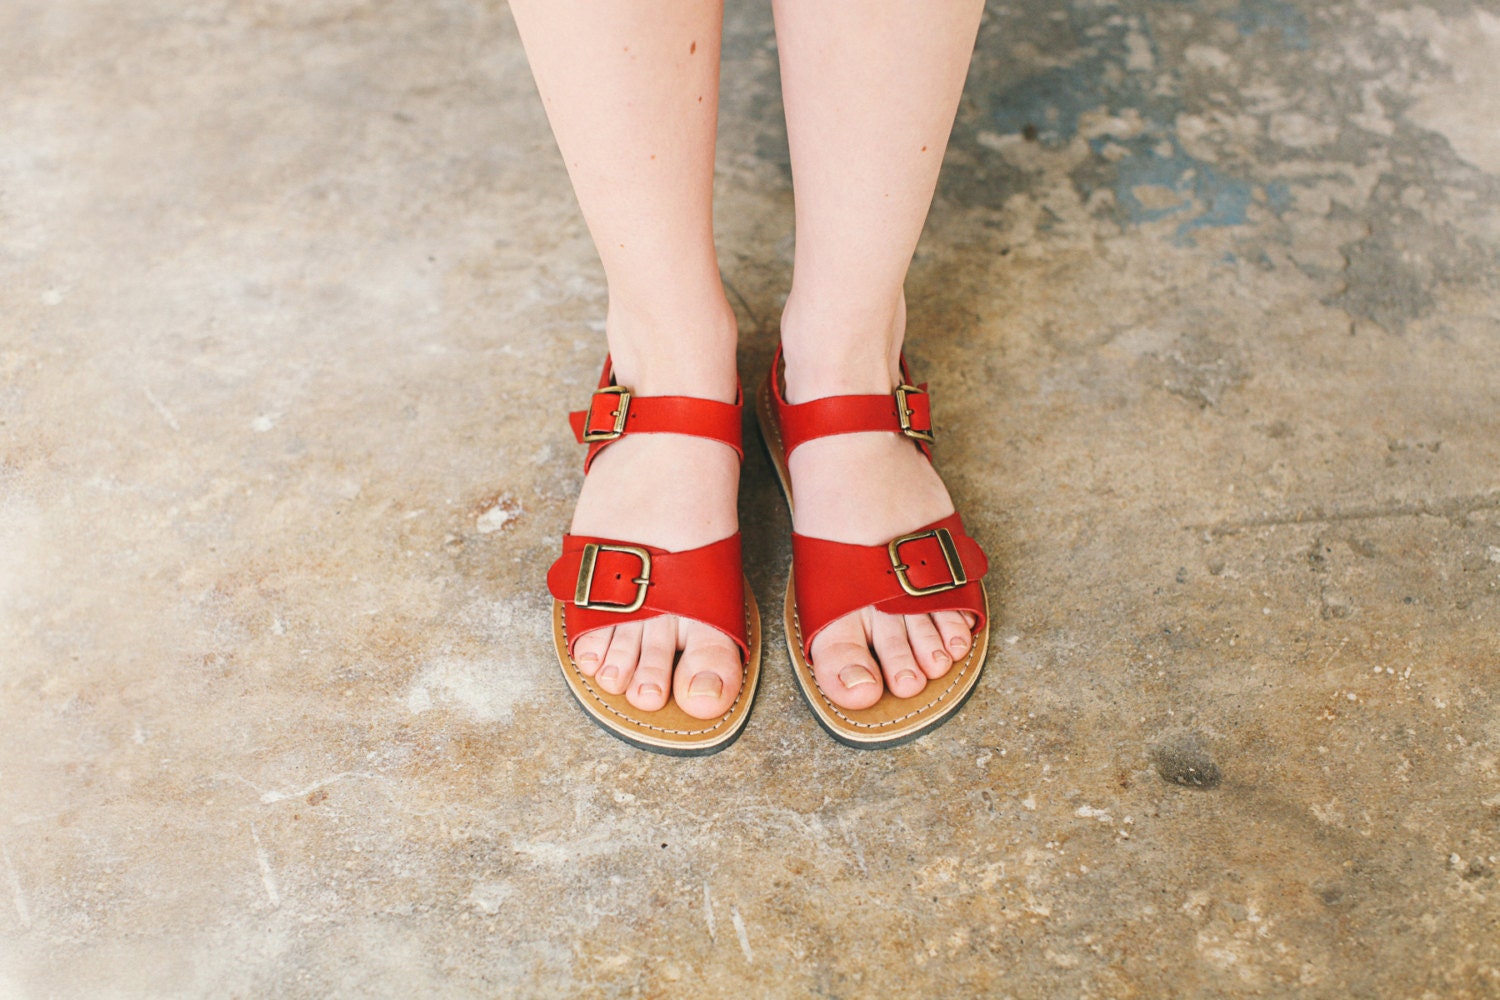 vrouwen sandalen smalle voet rode lederen sandalen met gesp duurzaam lederen sandalen Schoenen damesschoenen Sandalen Slingbacks & Slides zomerschoenen Brede voet verstelbare fit sandaal 